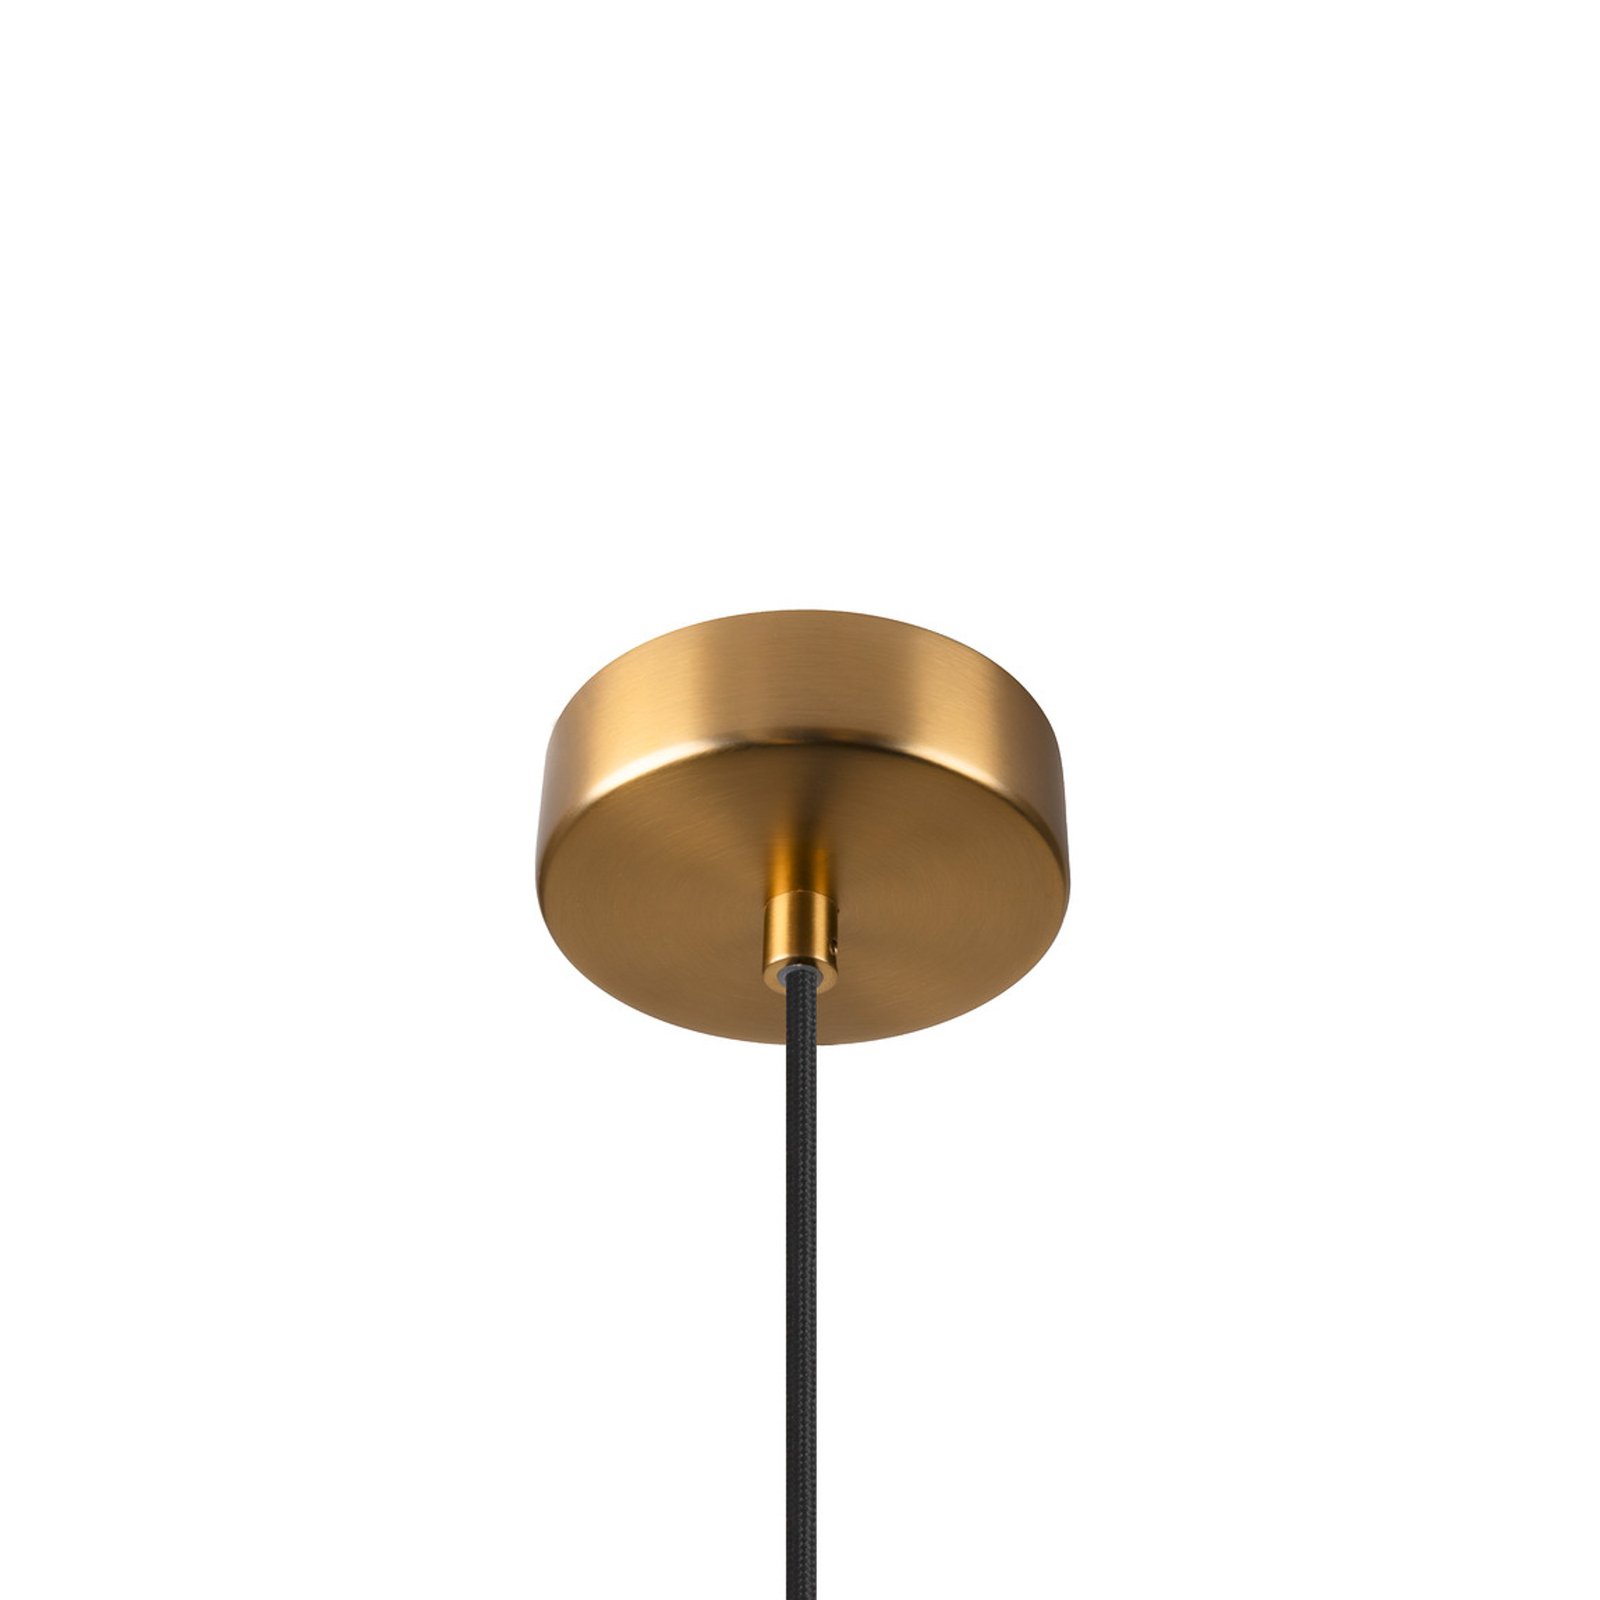 Pantilo Rope 27 lampada a sospensione, colore oro, acciaio, Ø 27 cm